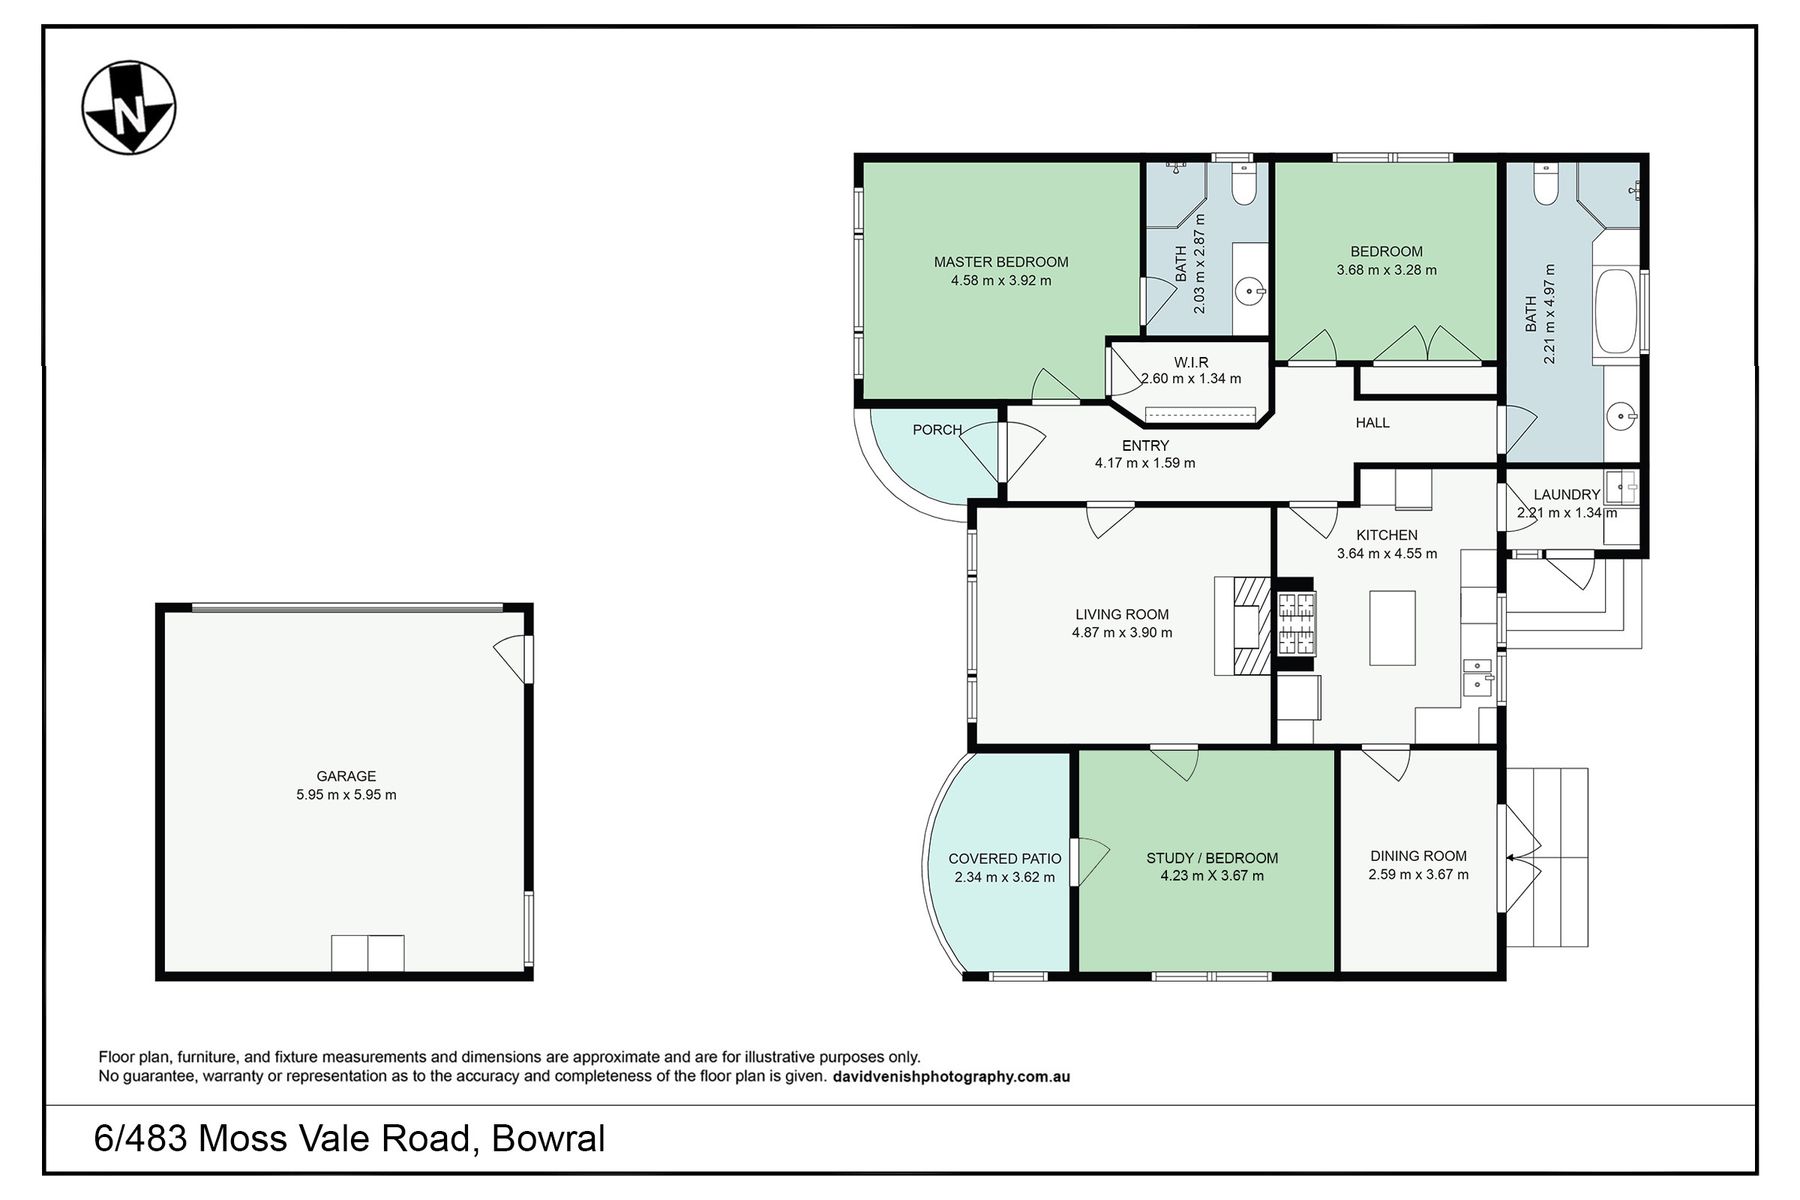 Unit 6, 483 Moss Vale Rd, Bowral   Floor Plan